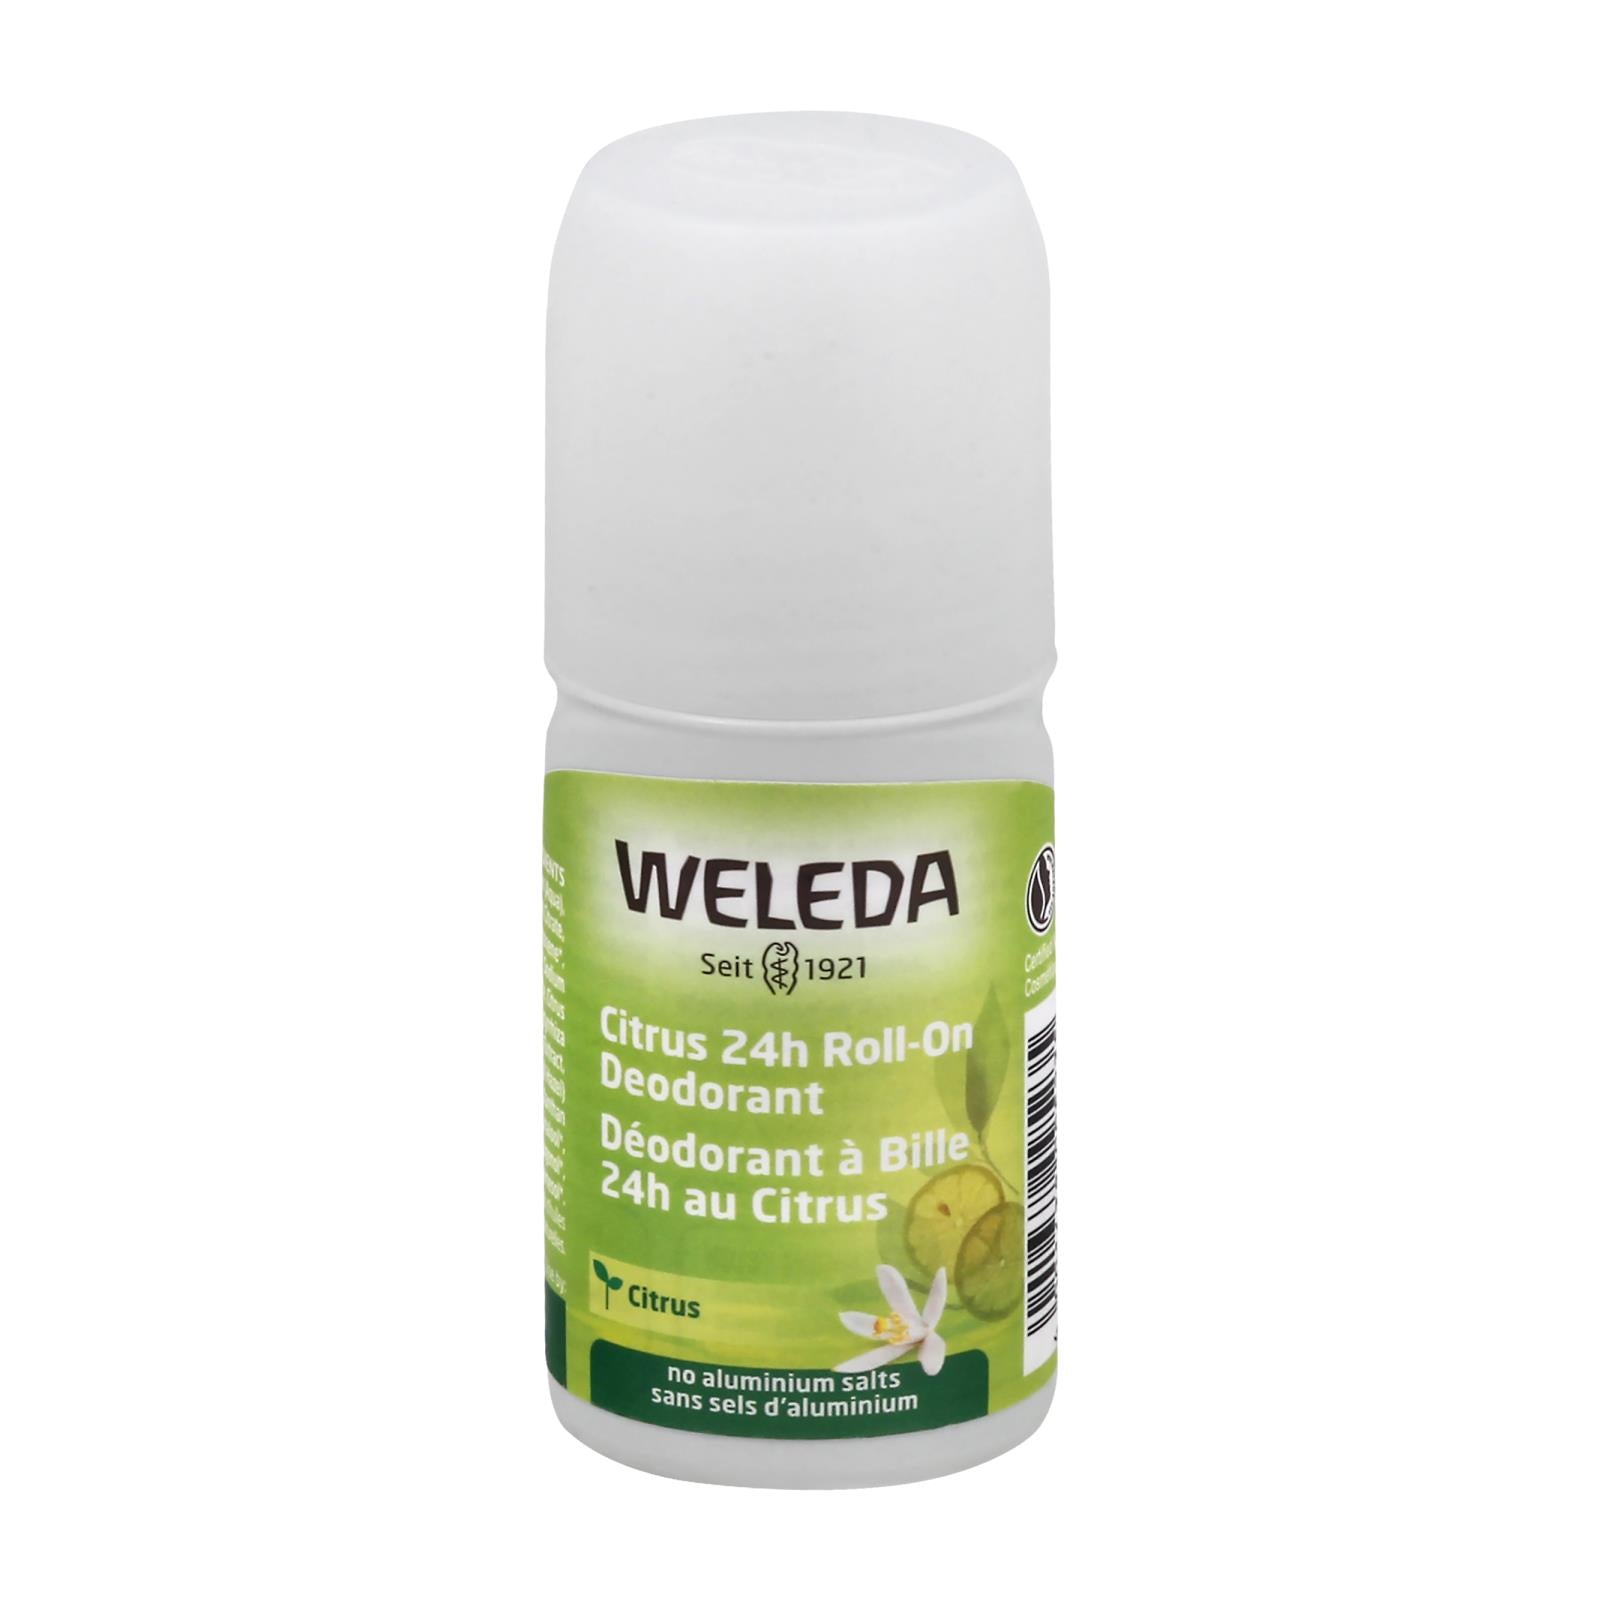 Weleda - Deodorant Roll On Citrus - 1 Each - 1.7 Fz